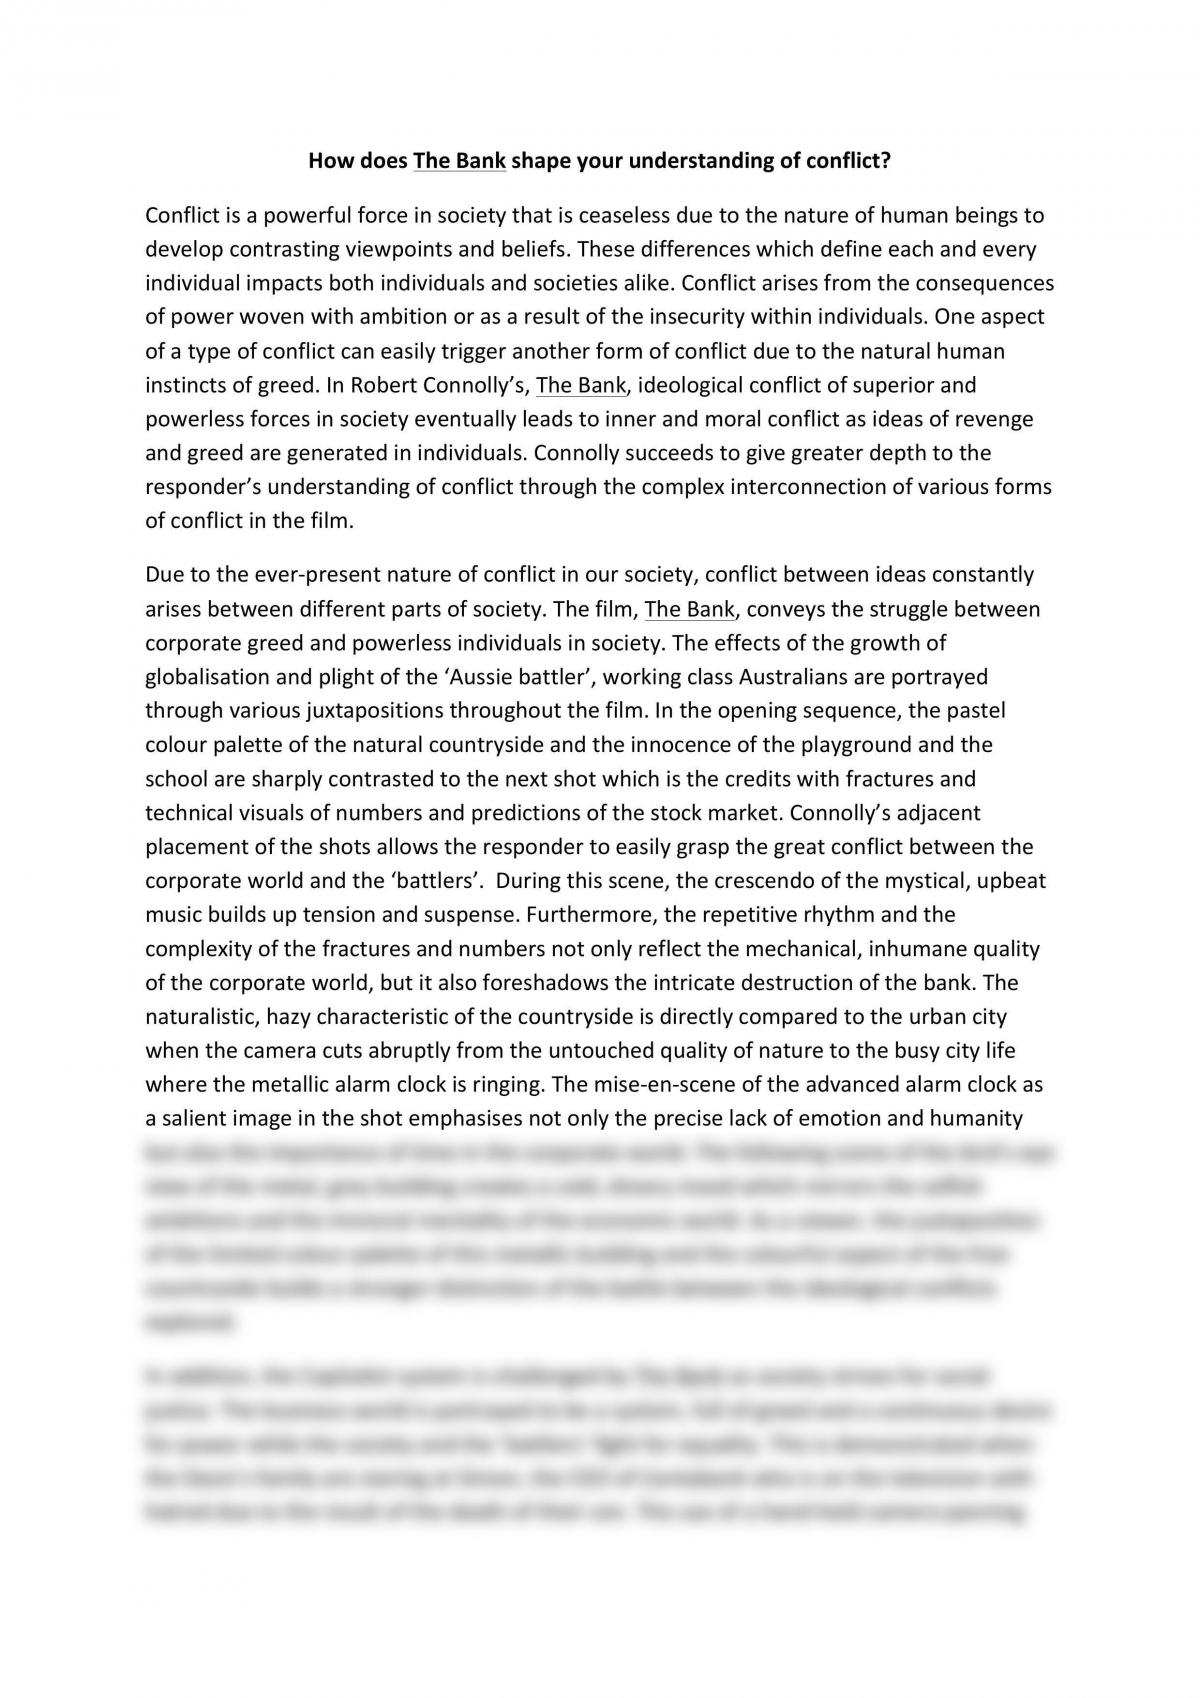 banking essay pdf